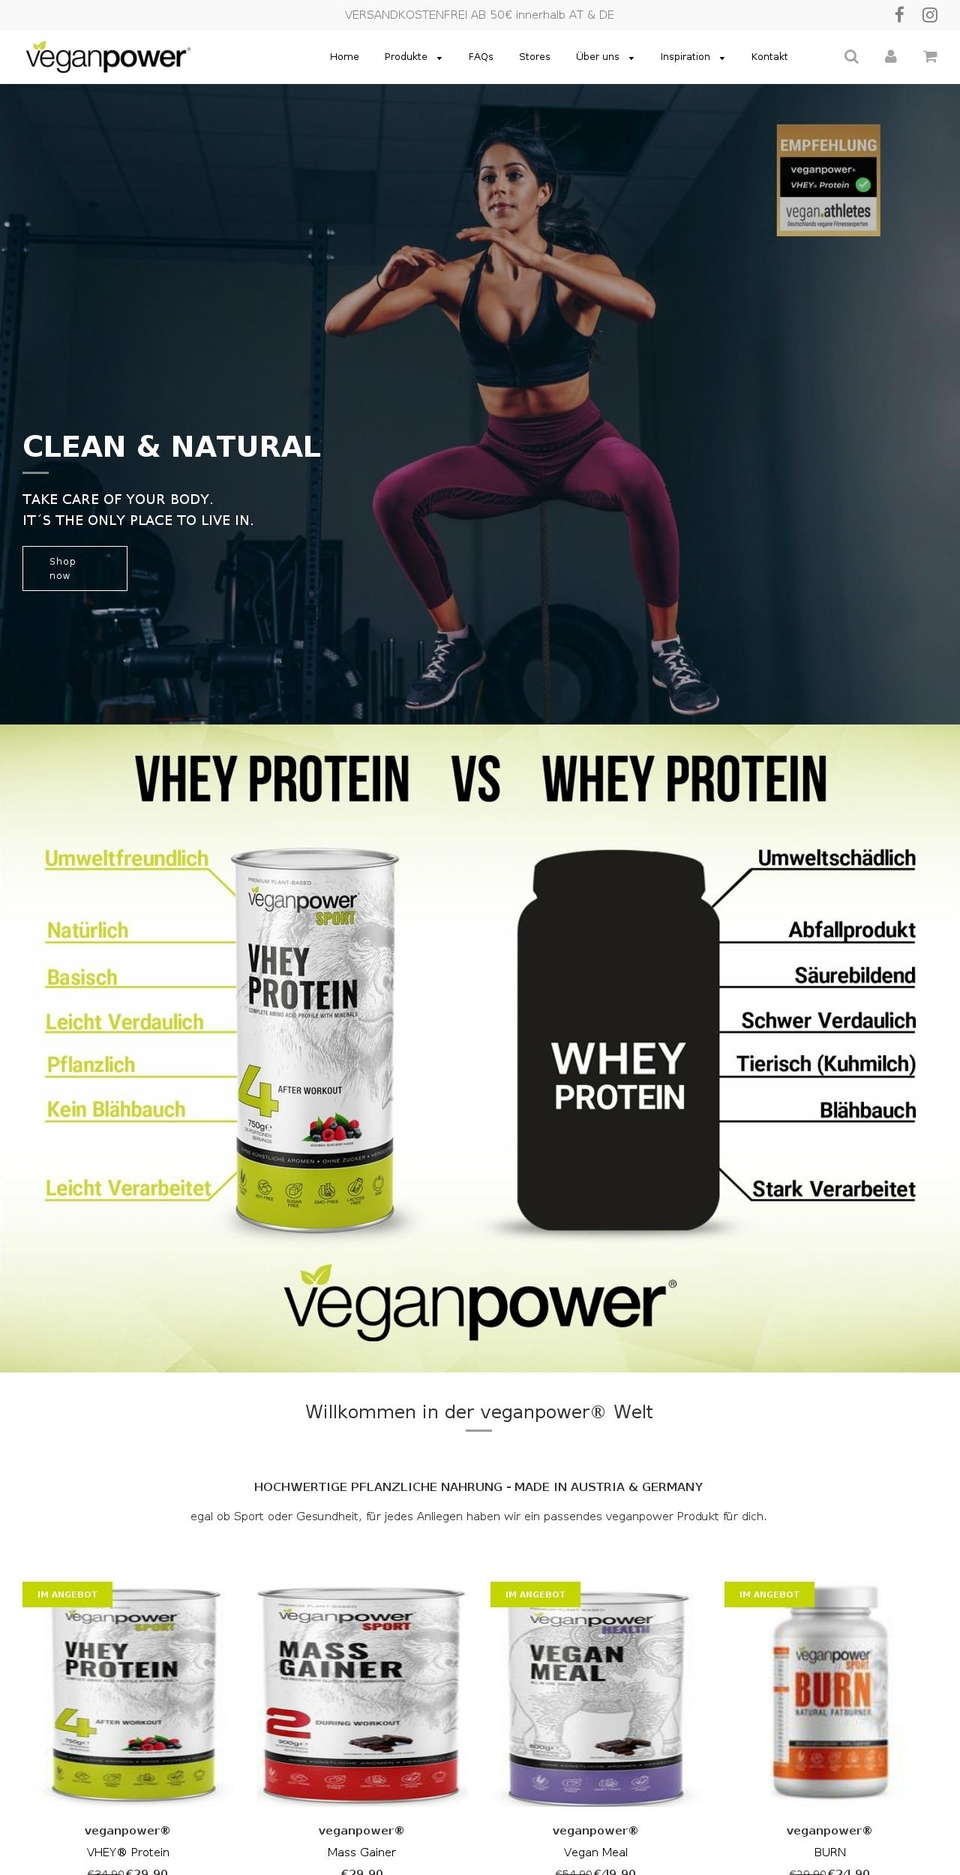 veganpower.at shopify website screenshot